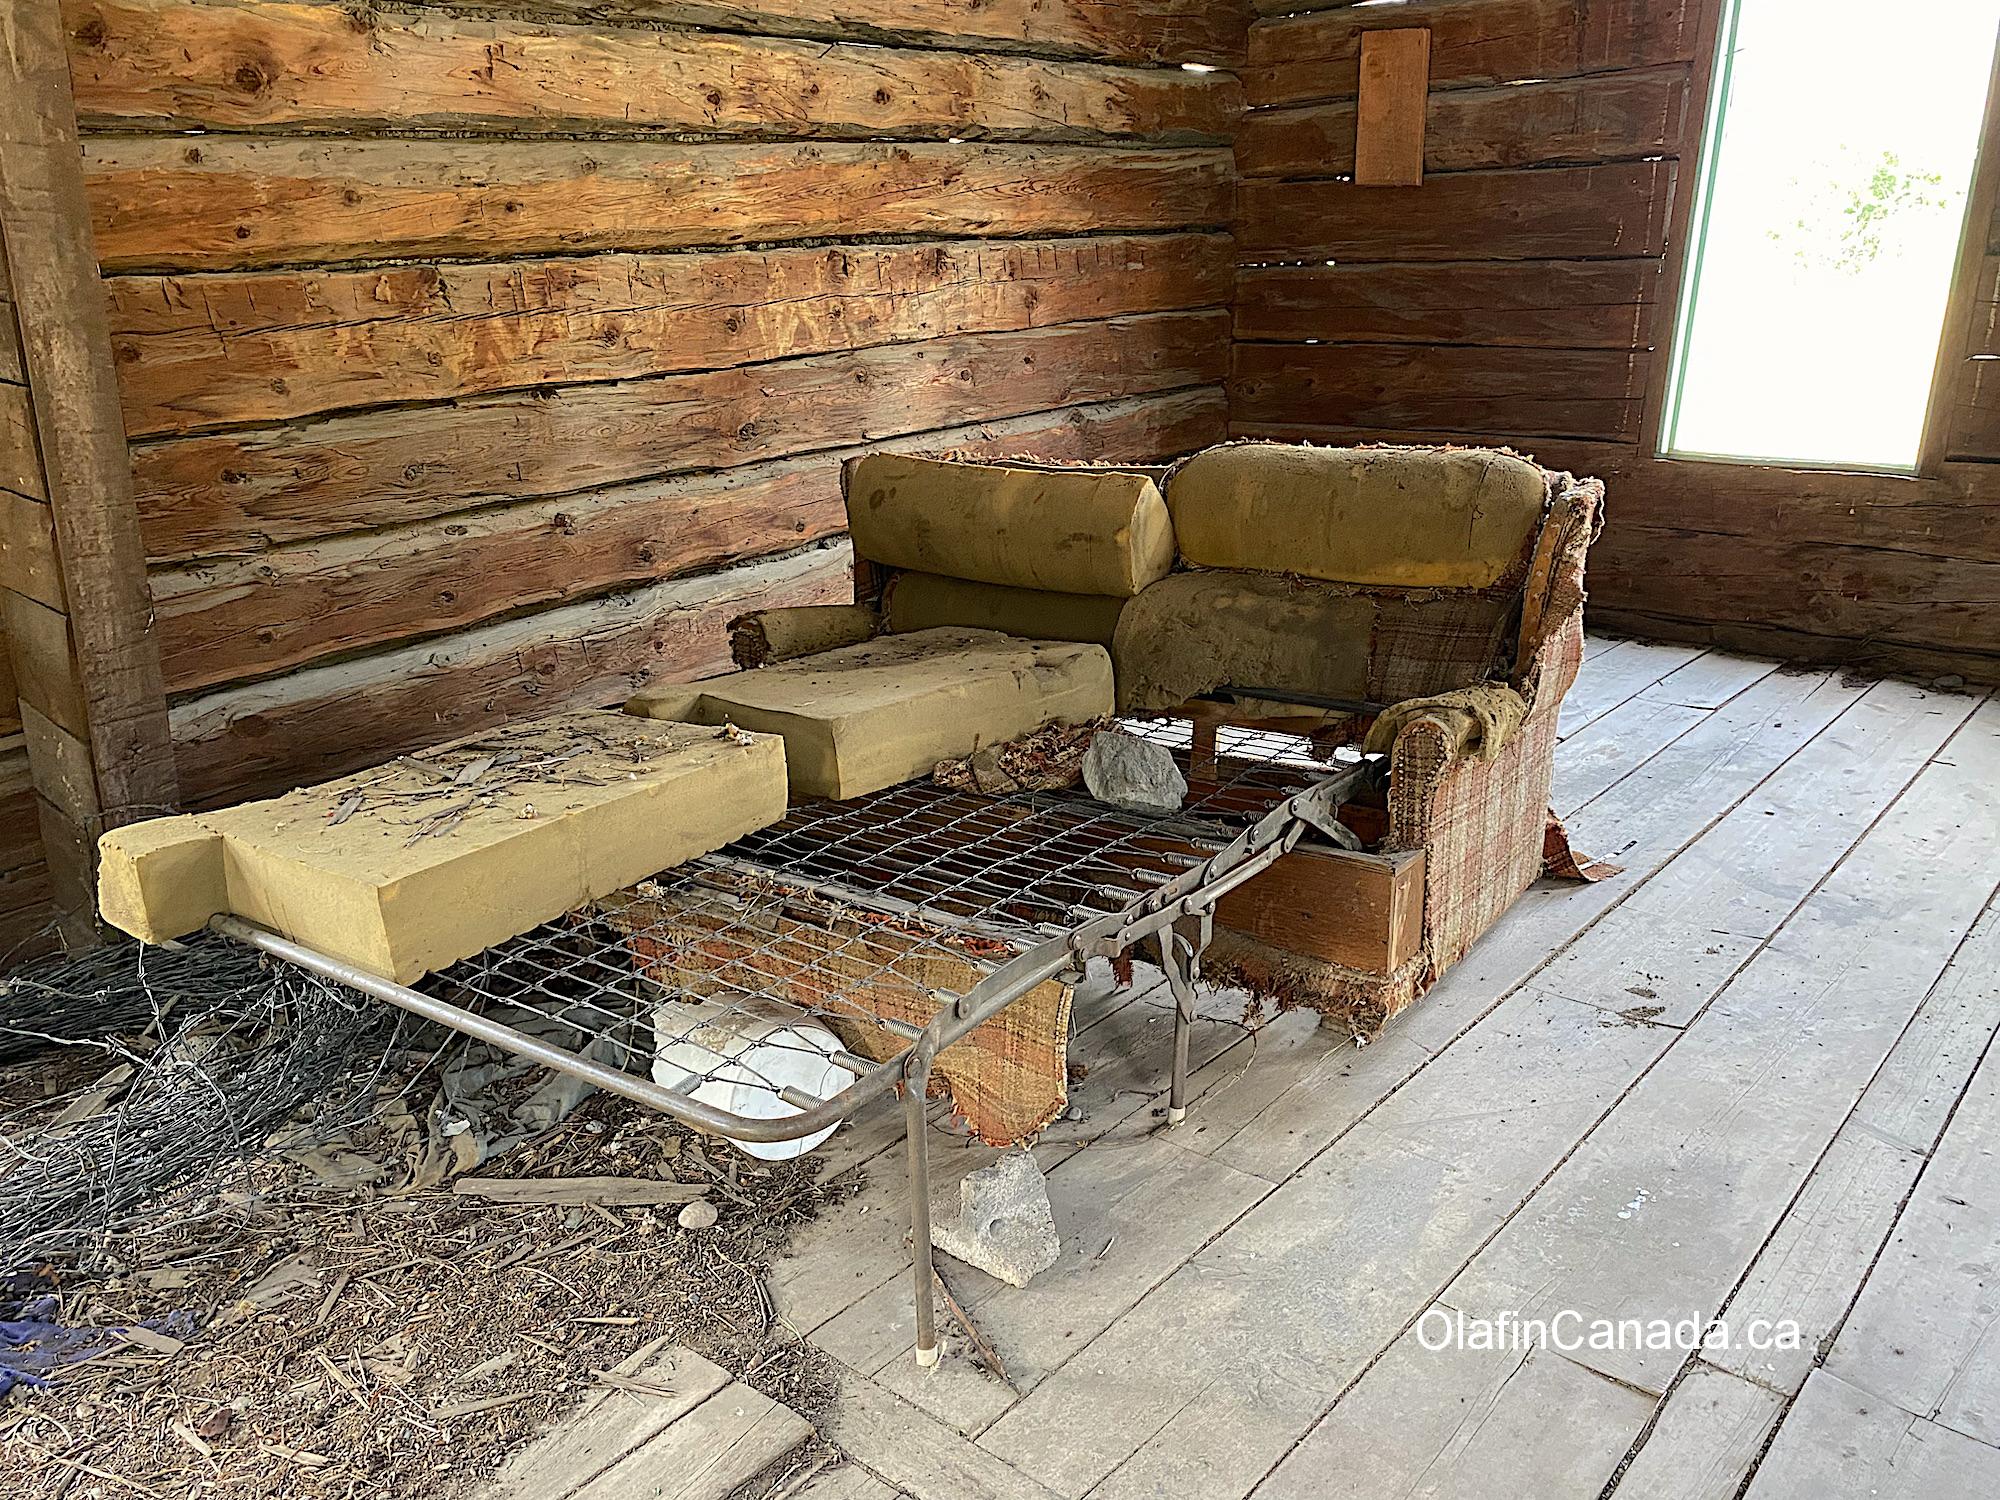 Abandoned sofa bed in the homestead at the Pothole Ranch #olafincanada #britishcolumbia #discoverbc #abandonedbc #chilcotin #farwellcanyon #potholeranch #homestead